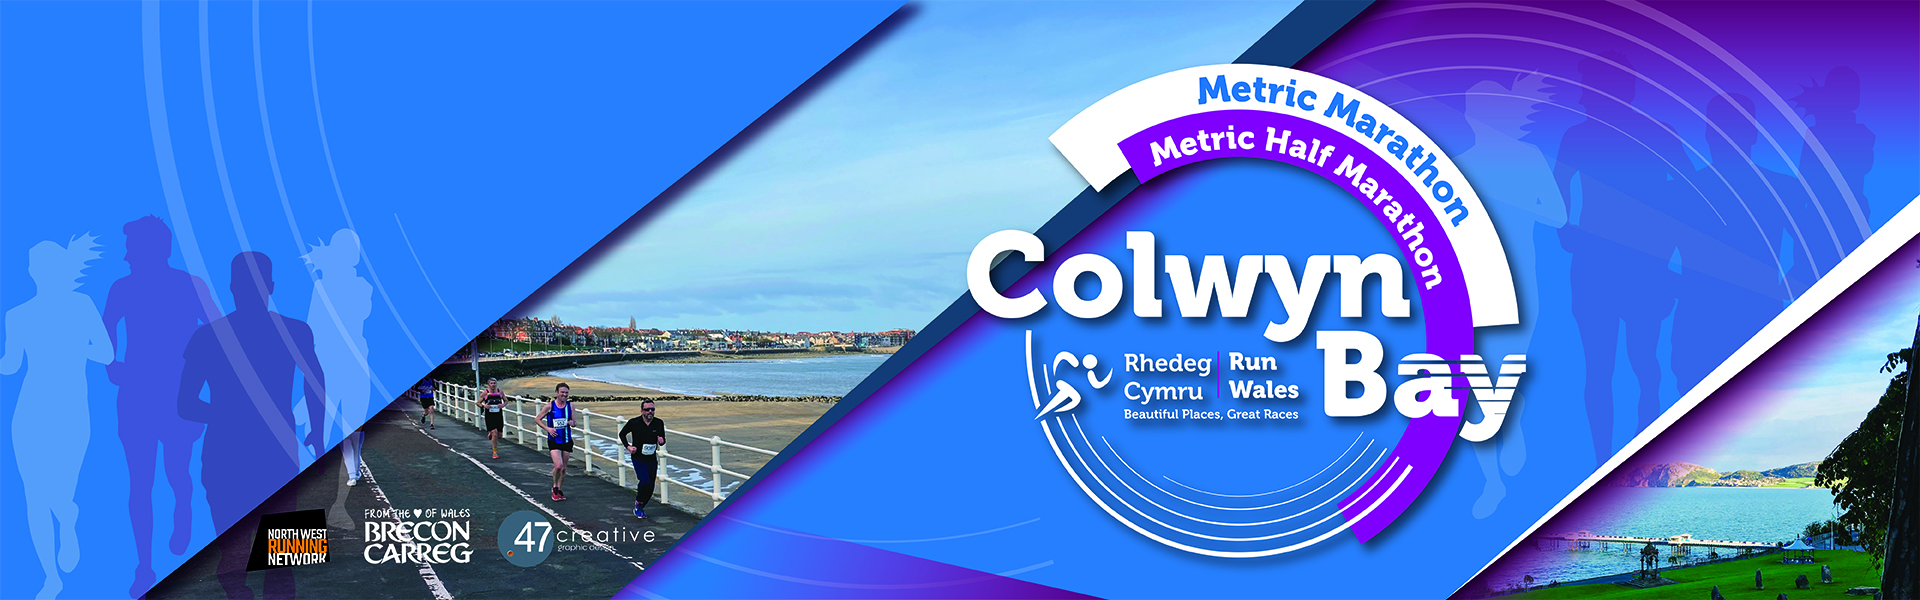 Colwyn Bay Metric Marathon & Half Marathon